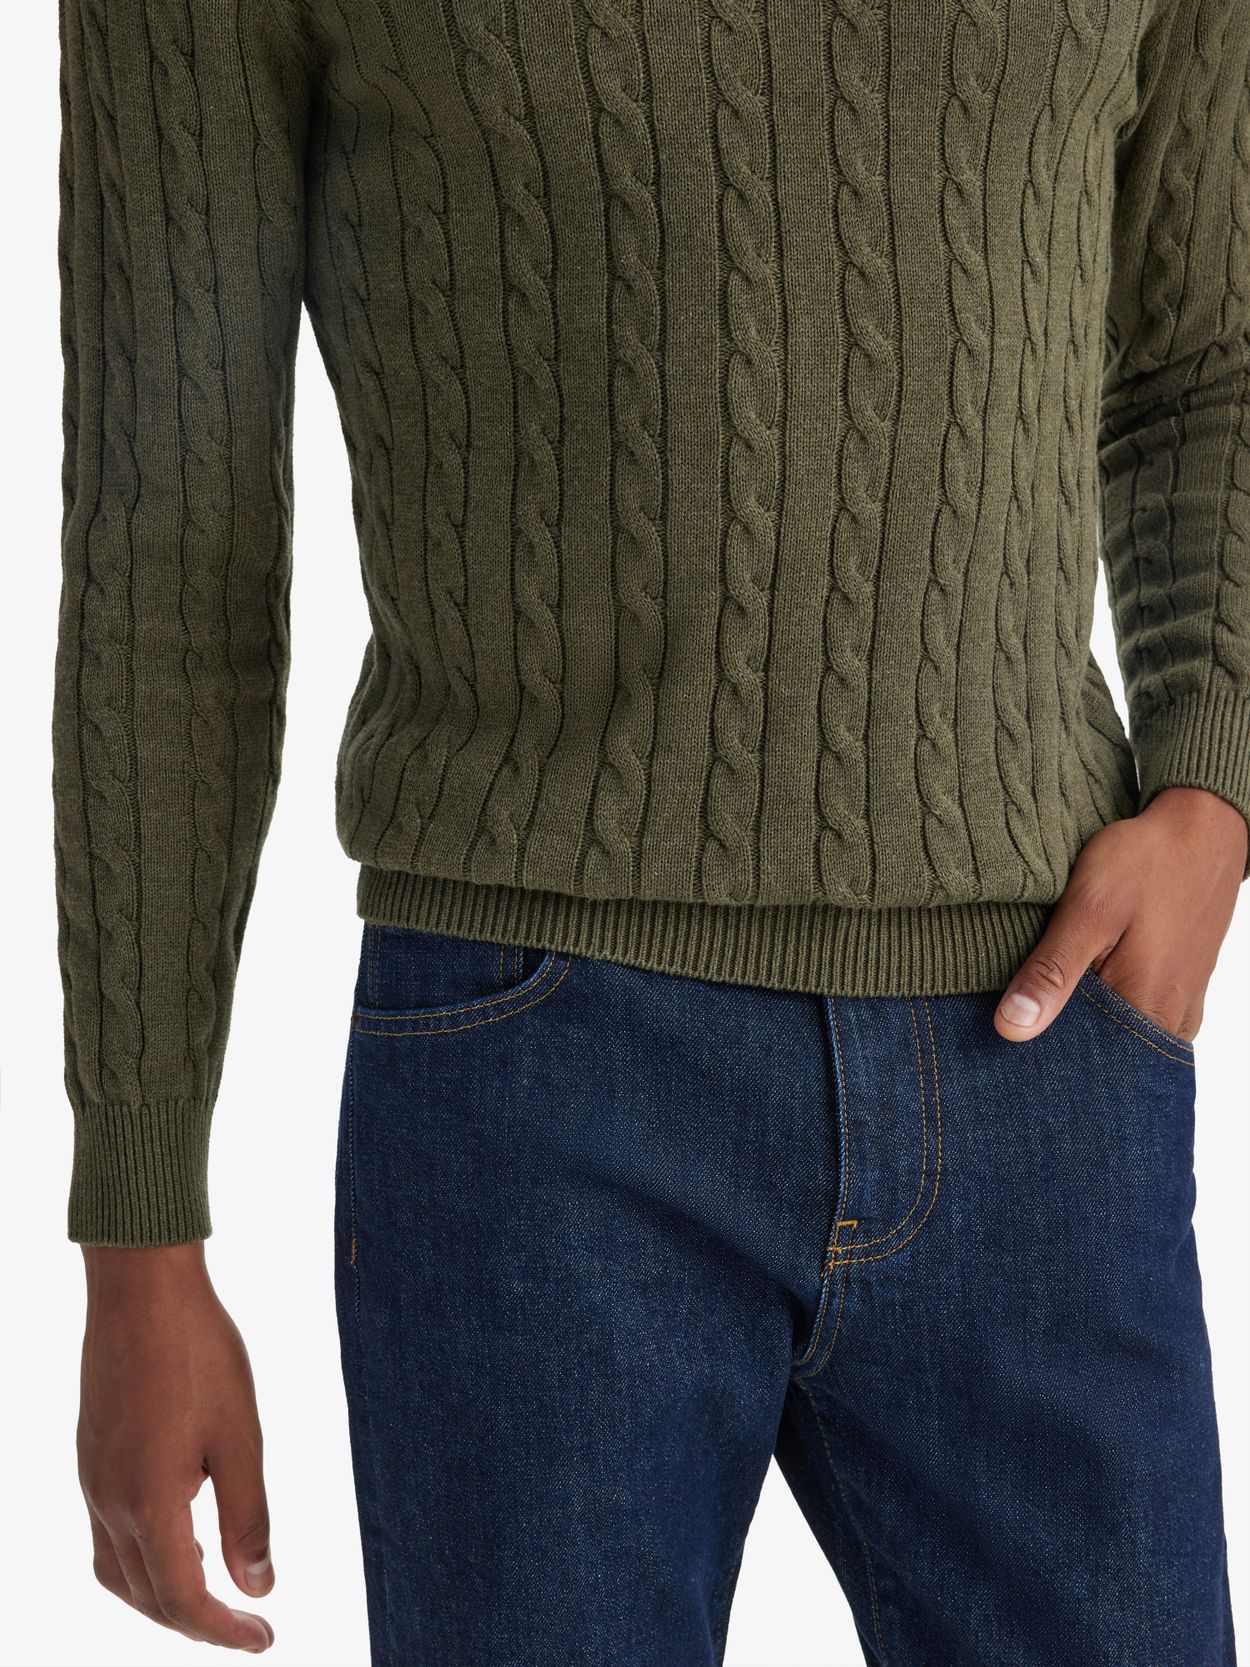 Green for Men John Richmond Synthetic Turtleneck in Dark Green Mens Clothing Sweaters and knitwear Turtlenecks 